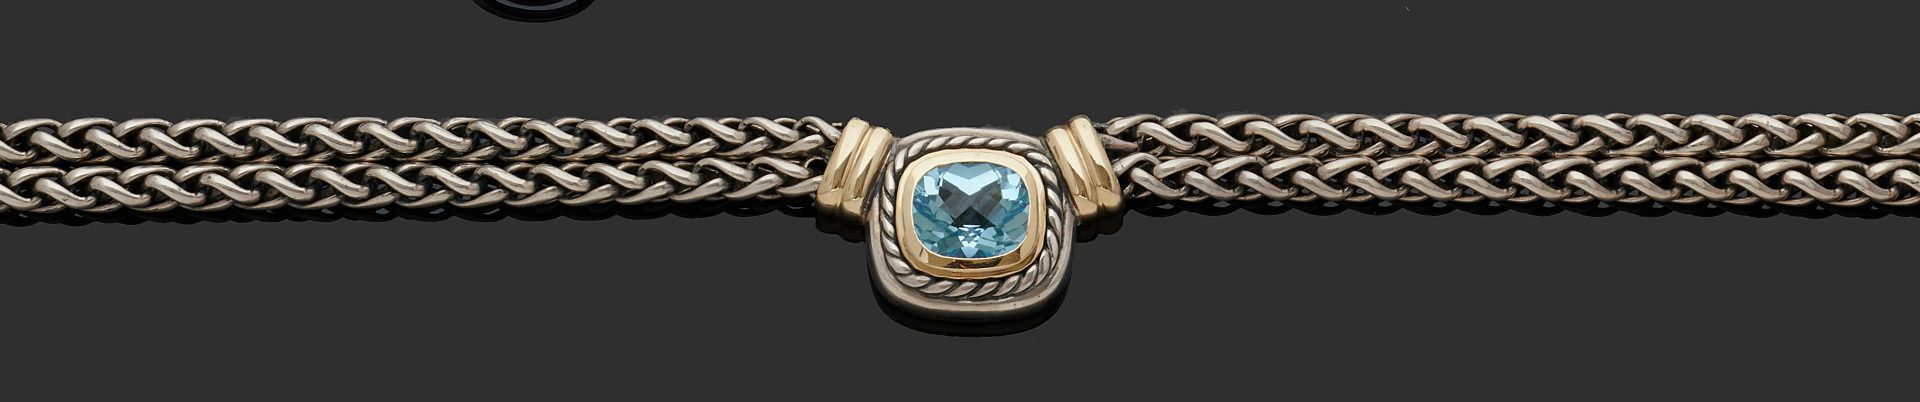 Null D.YURMAN
项链的两根铰链由千分之八十的银和千分之五十五的金制成，中间是千分之九十二的银和千分之五十五的金，上面装饰着一块完全刻面的蓝色石头。
&hellip;